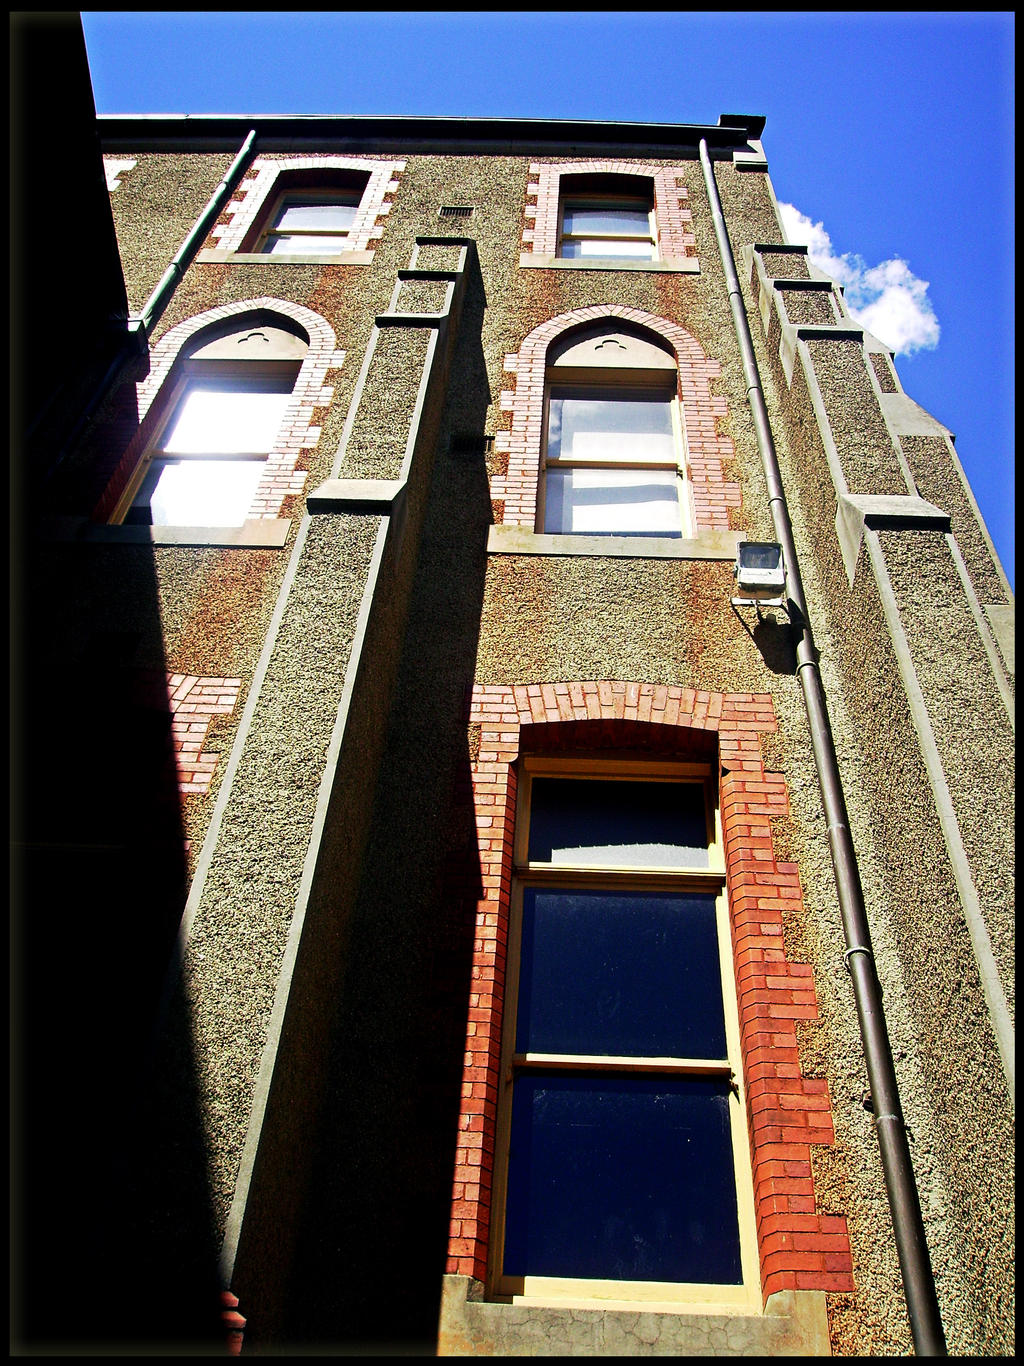 Abbotsford Convent #2 - Melbourne, Australia